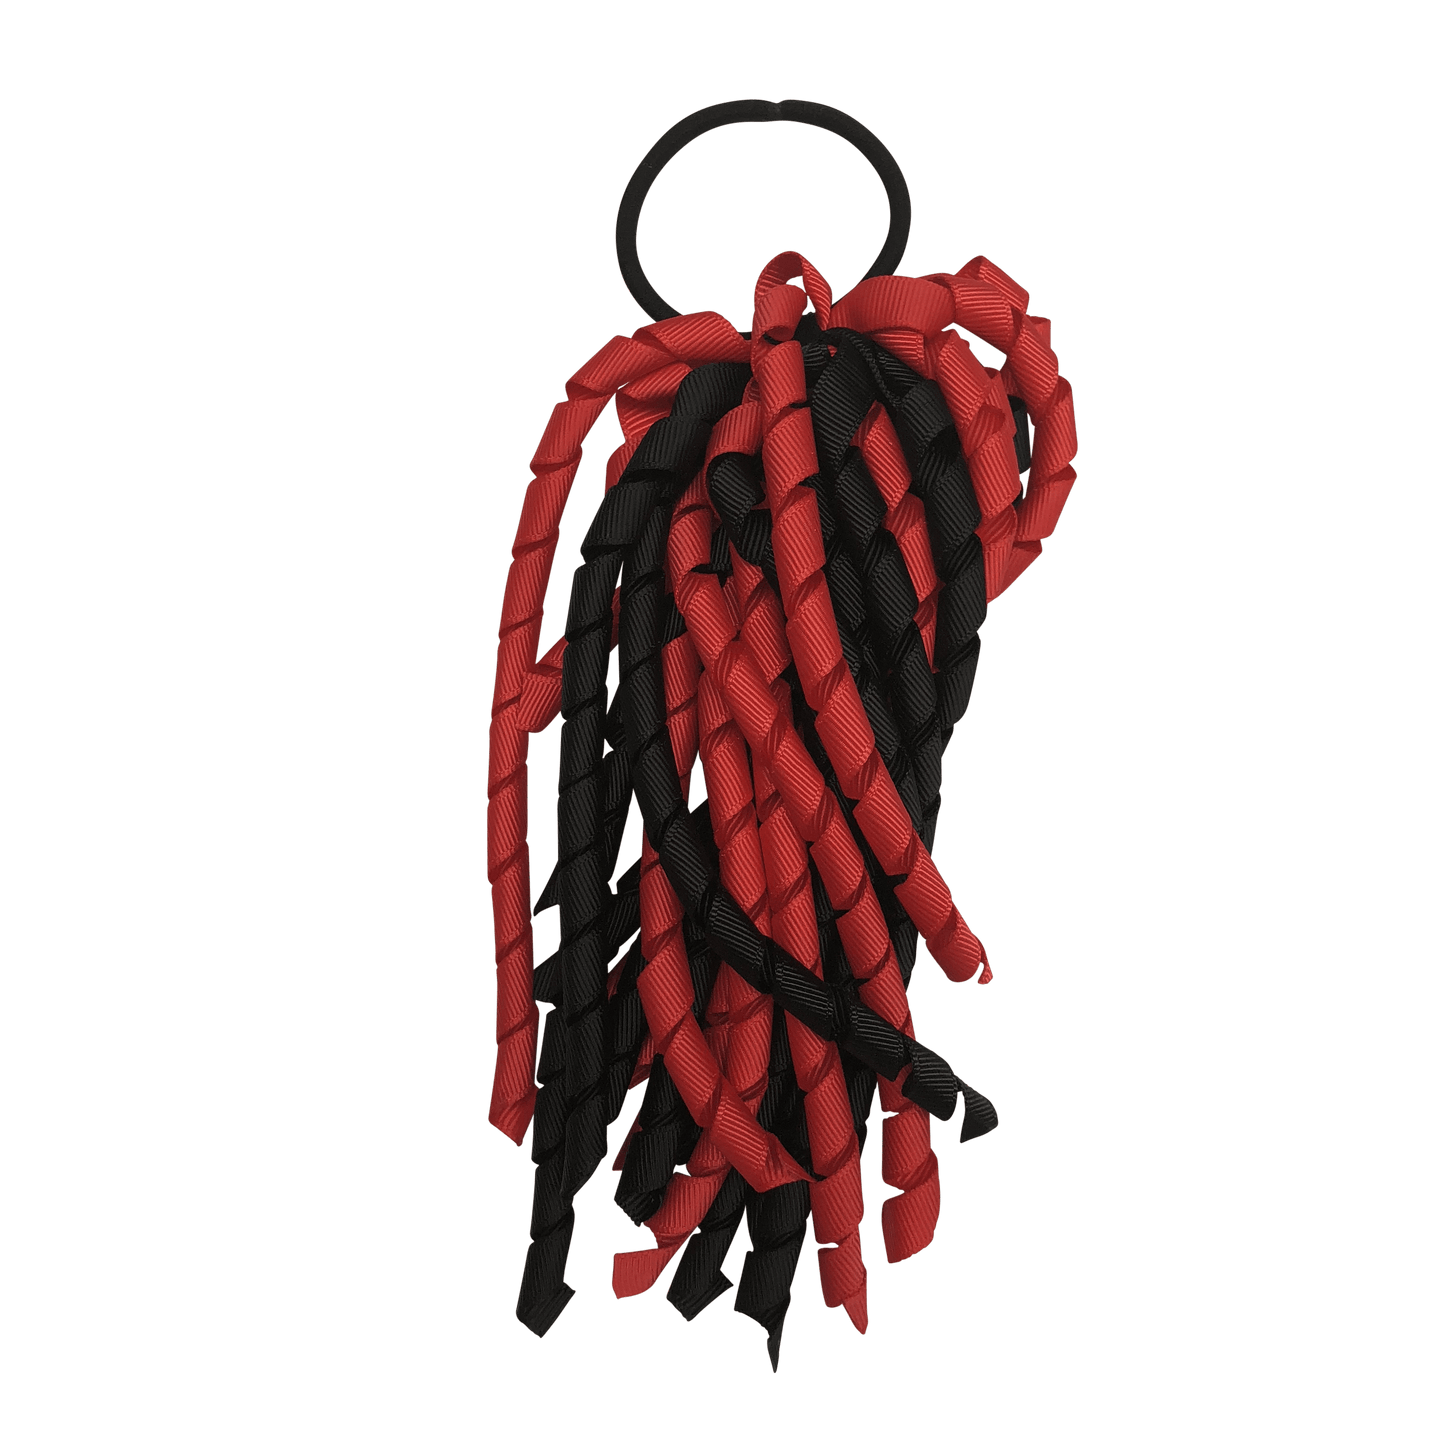 Red & Black Hair Accessories - Assorted Hair Accessories - School Uniform Hair Accessories - Ponytails and Fairytales